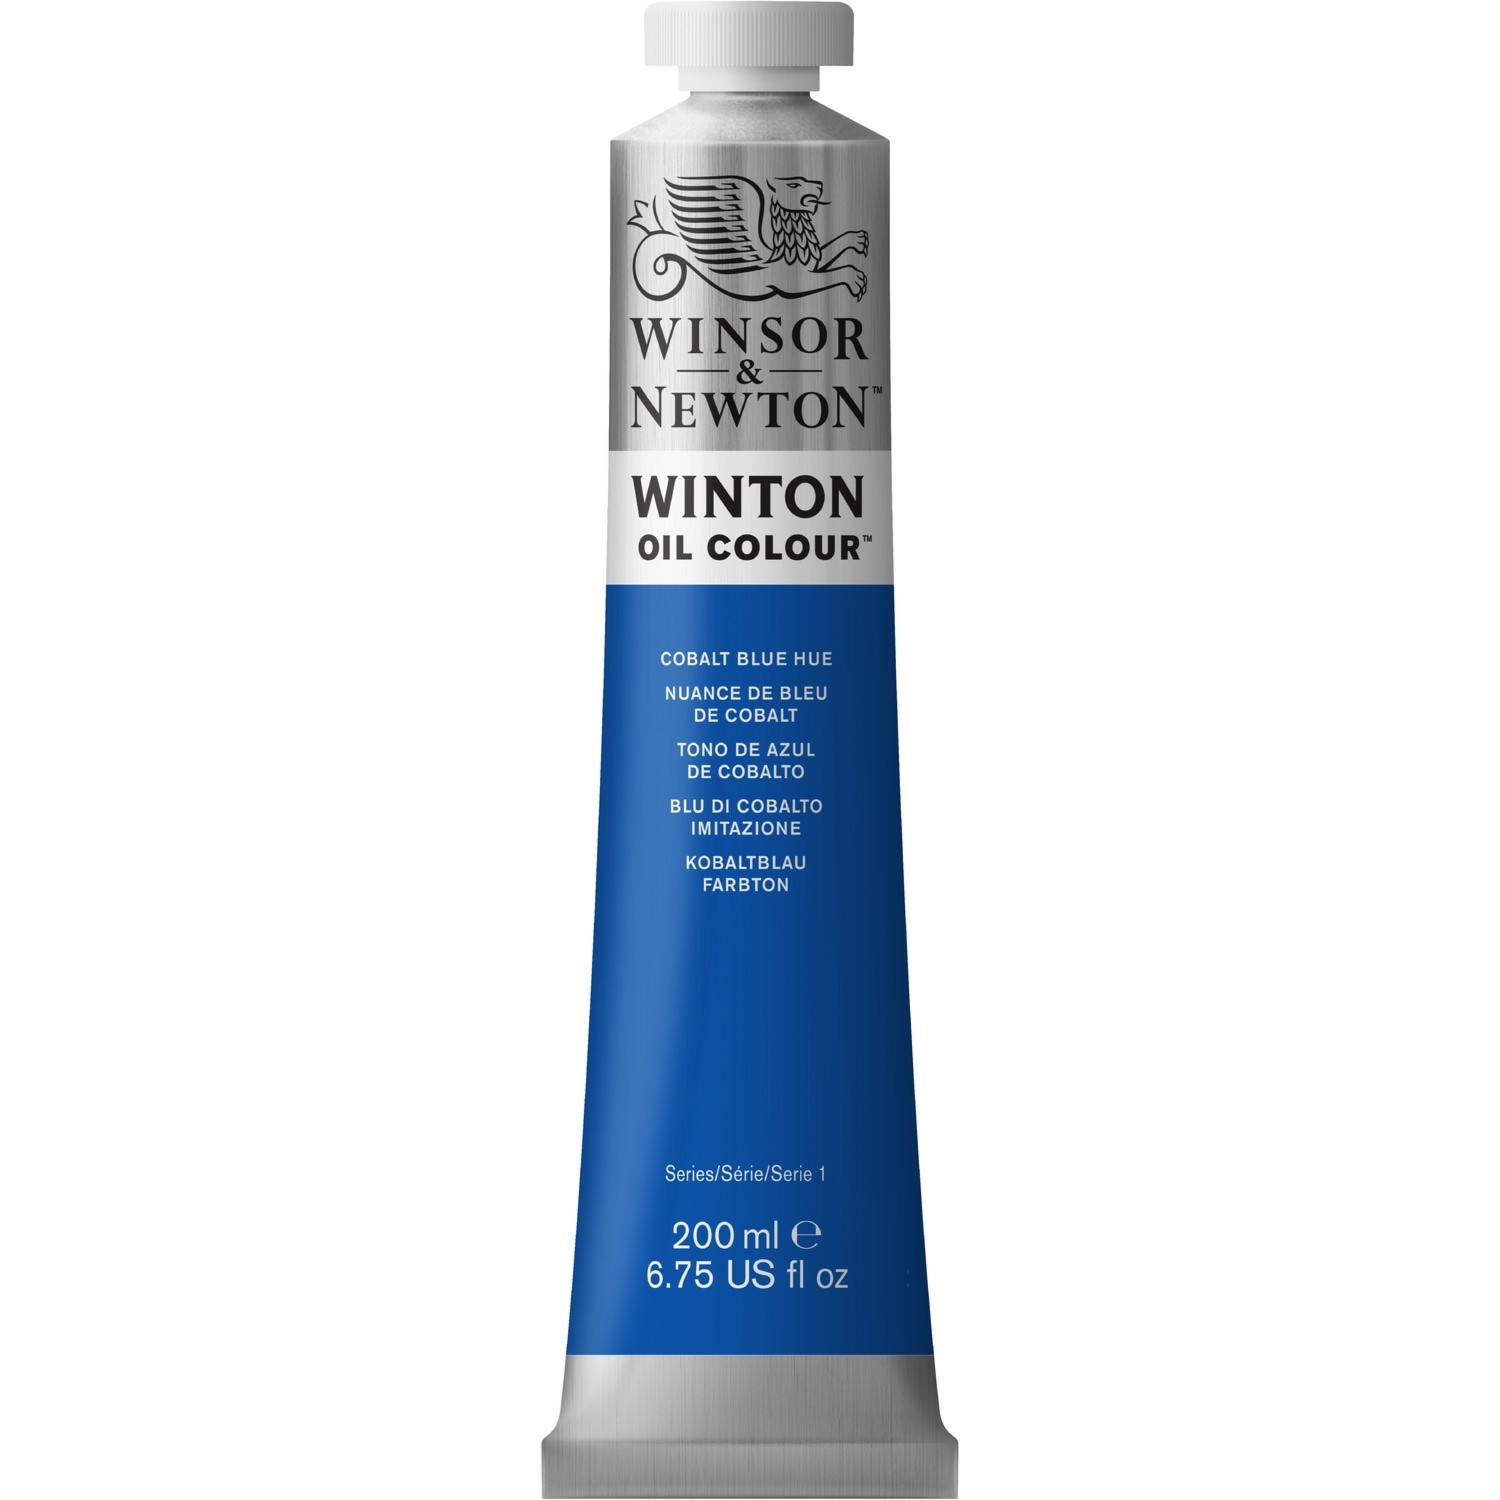 Winsor and Newton 200ml Winton Oil Colours - Cobalt Blue Hue Image 1